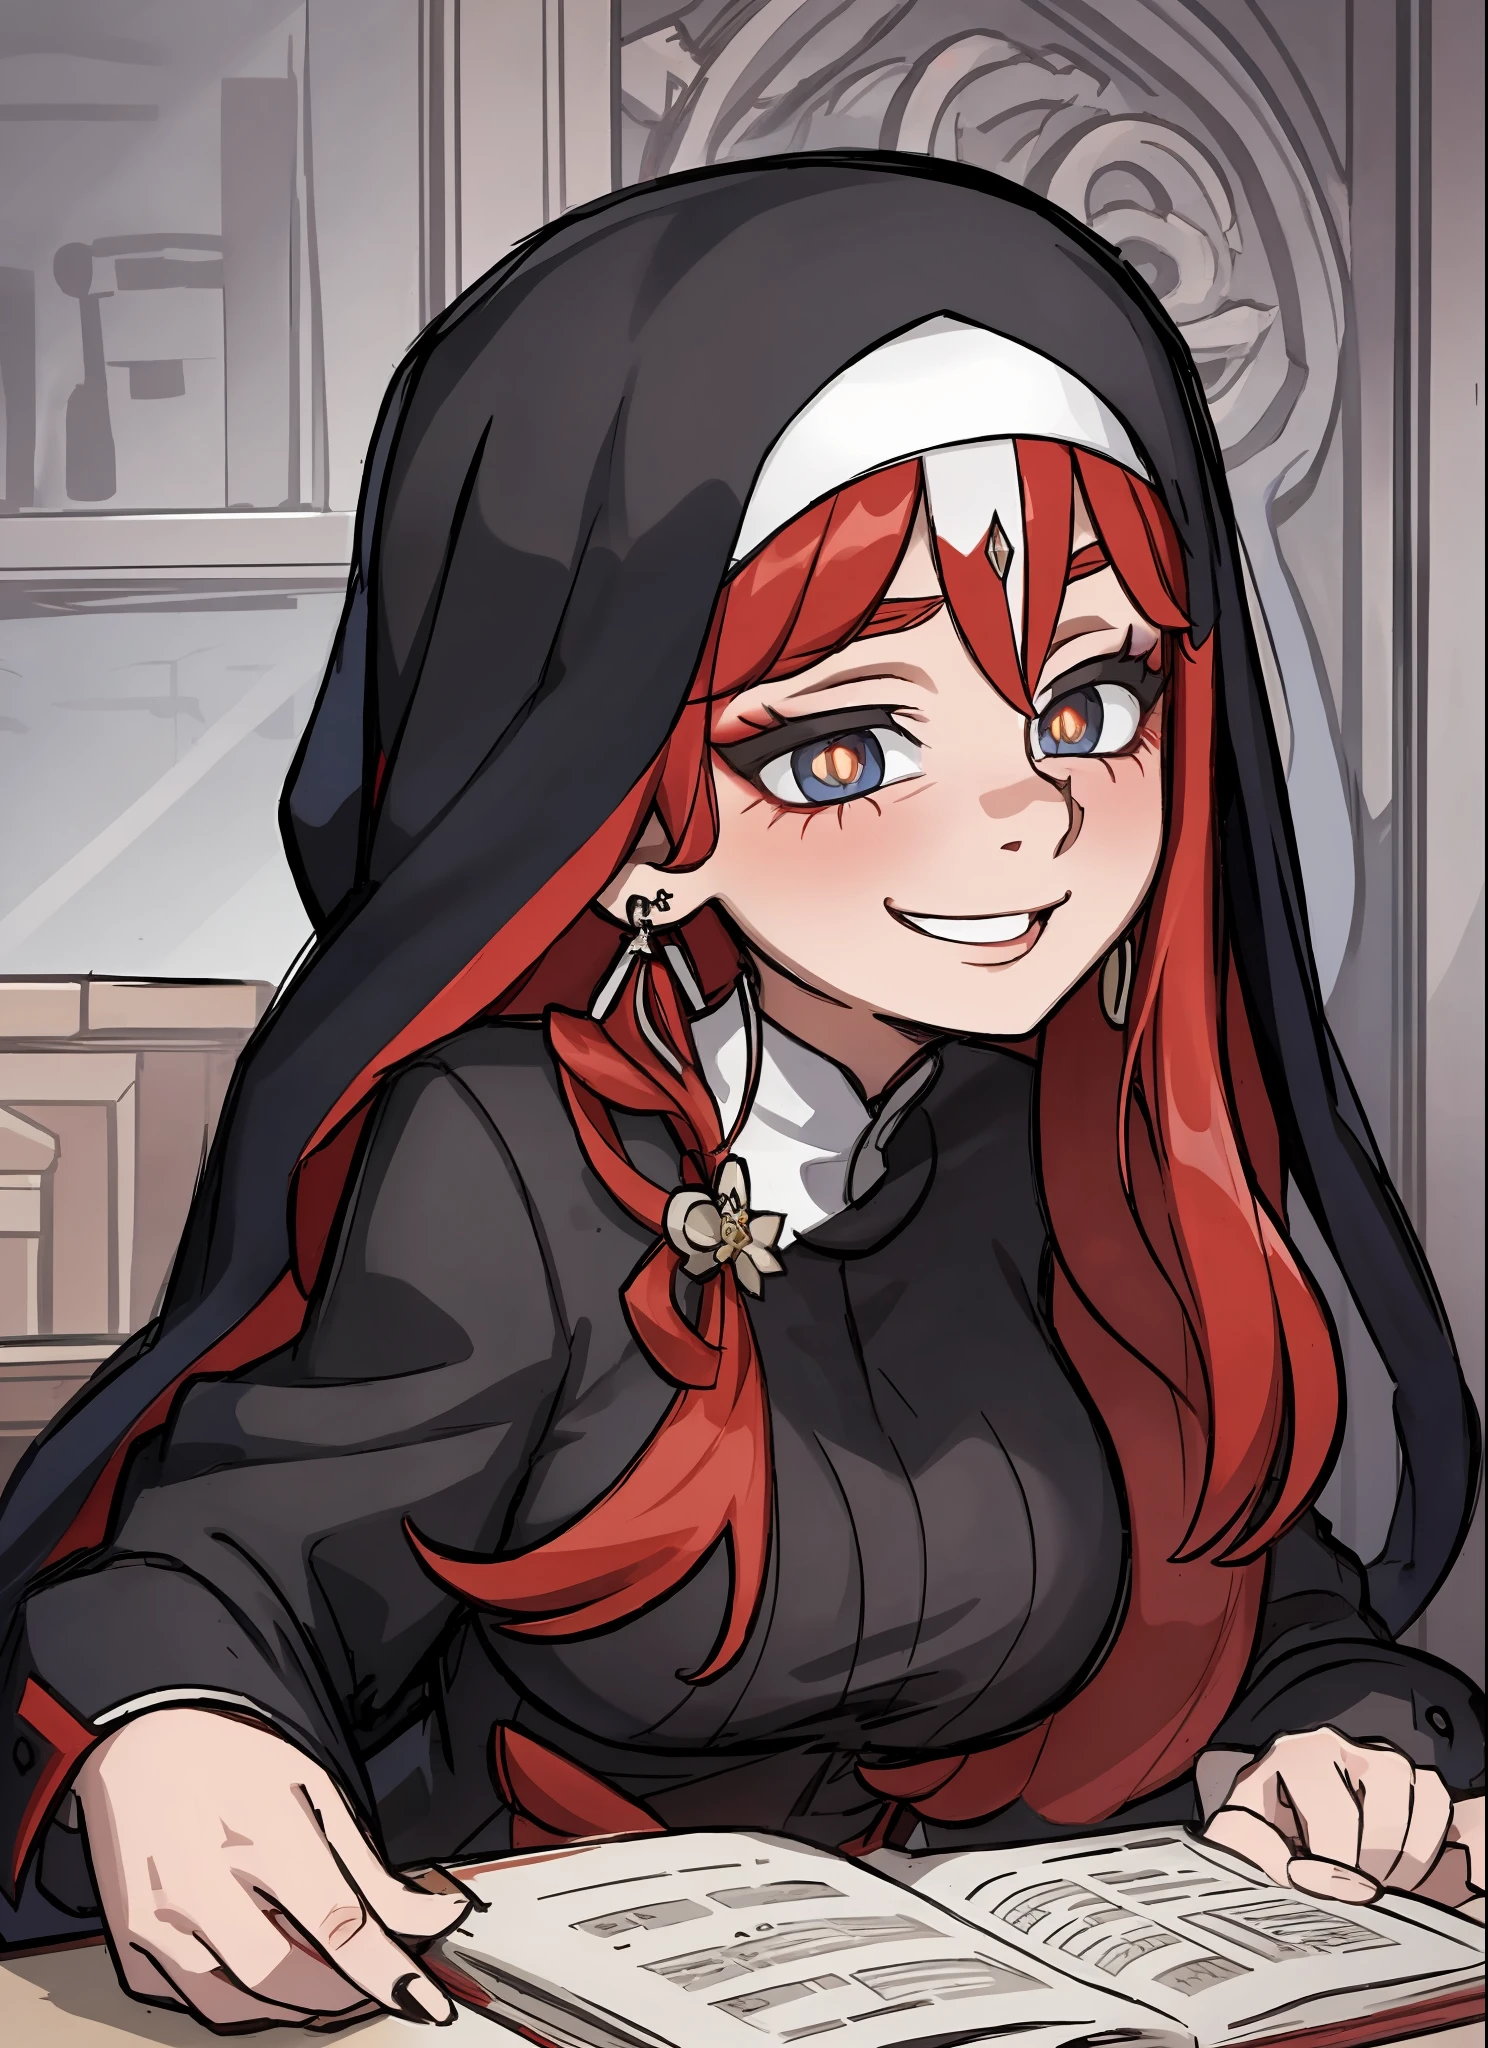 nun, sister, love in eyes, long red hair, red pupils, blushing, cute, smug, smile, rolling eyes, black nun outfit, goat horn, black earring